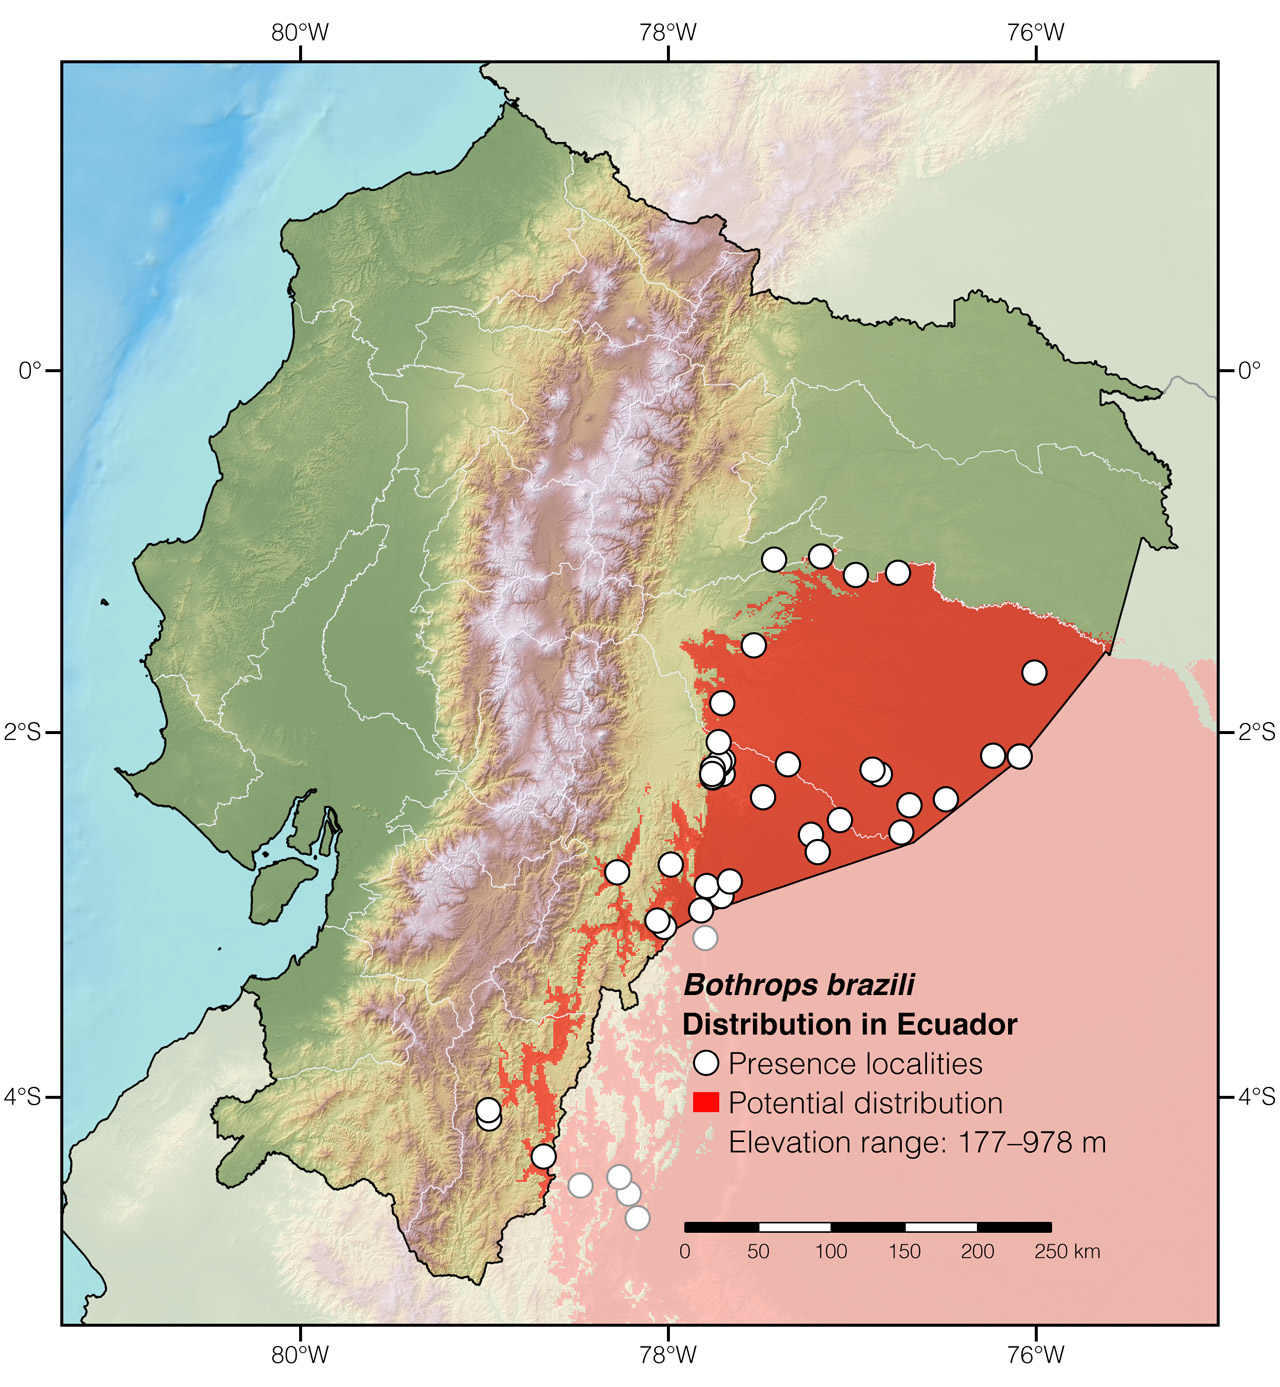 Distribution of Bothrops brazili in Ecuador